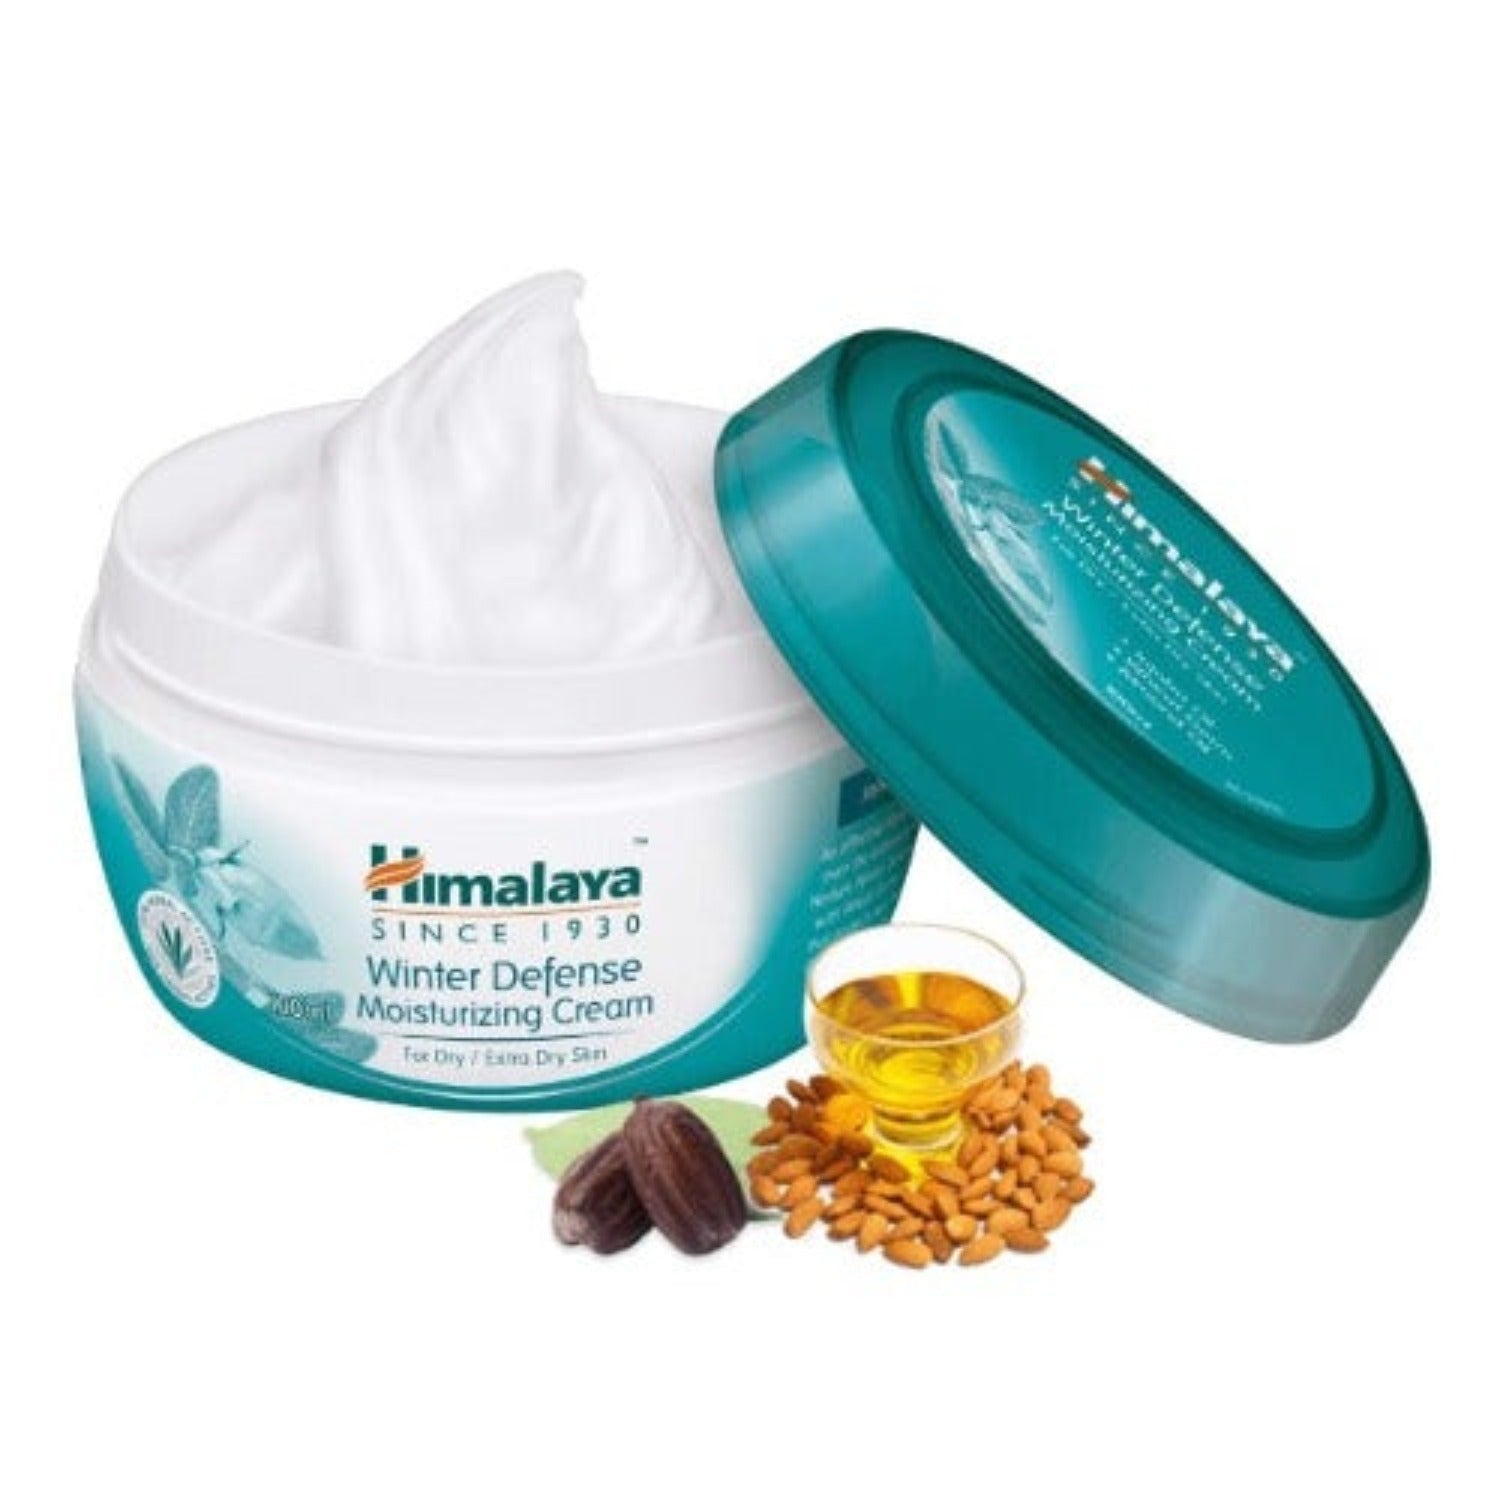 Himalaya Herbal Ayurvedic Personal Care Winter Defense Moisturizing For Dry/ Extra Dry Skin Cream